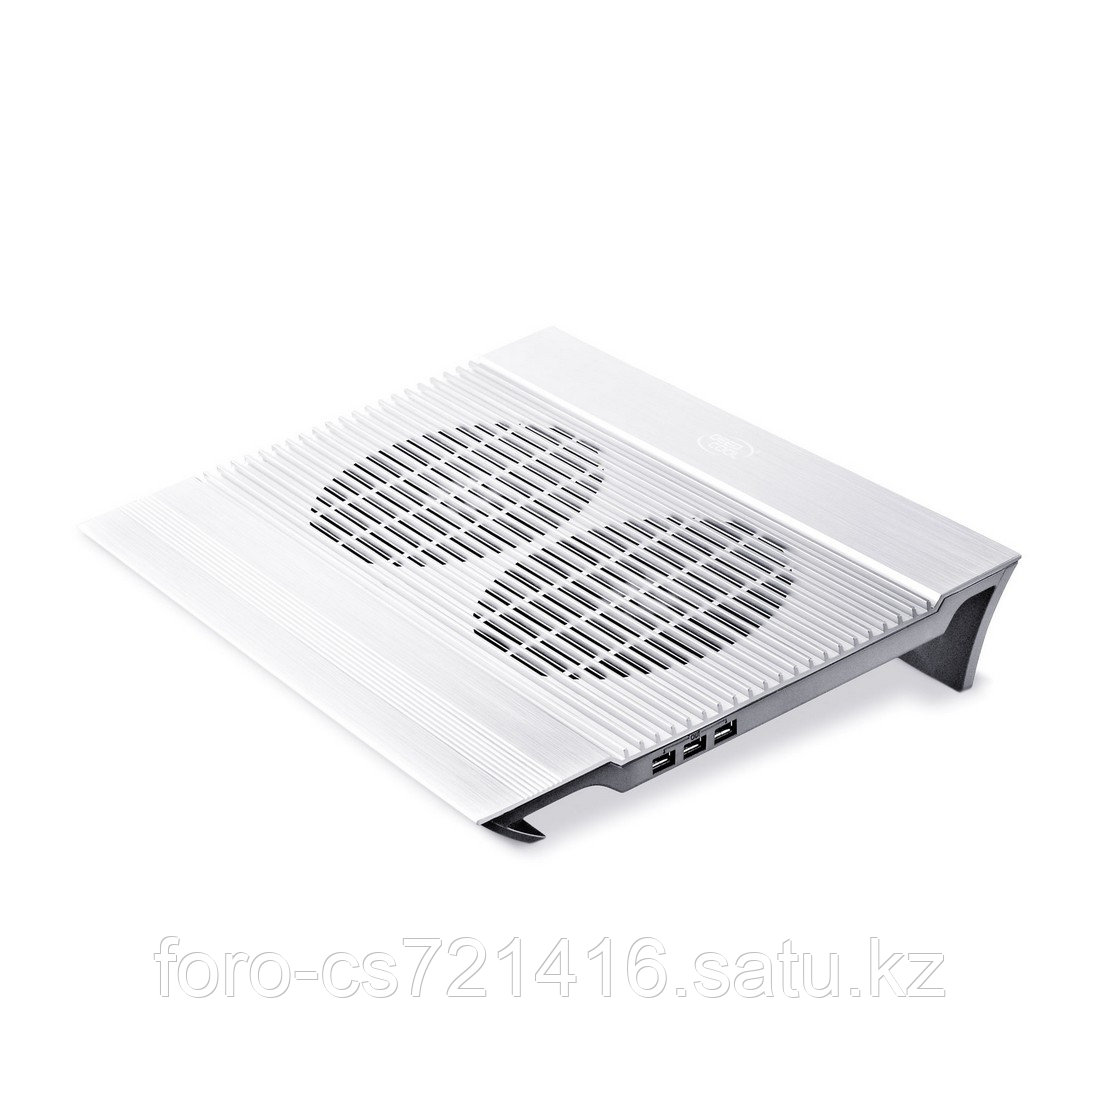 Охлаждающая подставка для ноутбука Deepcool N8 Silver 17", фото 1